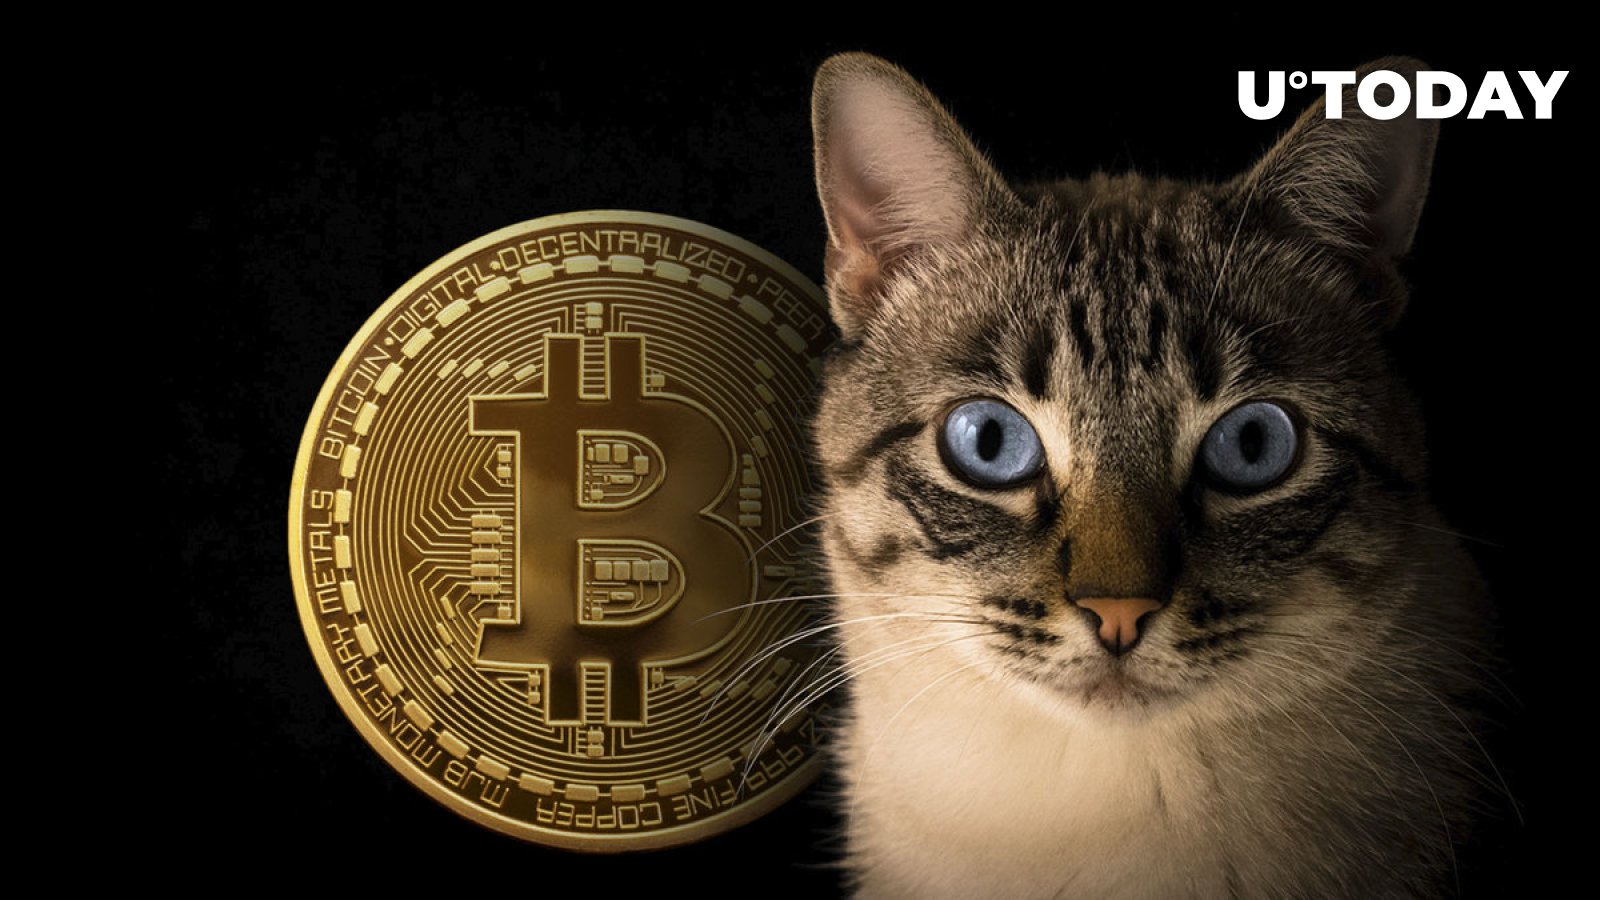 usd1-million-bitcoin-bet-winner-to-fund-cat-house